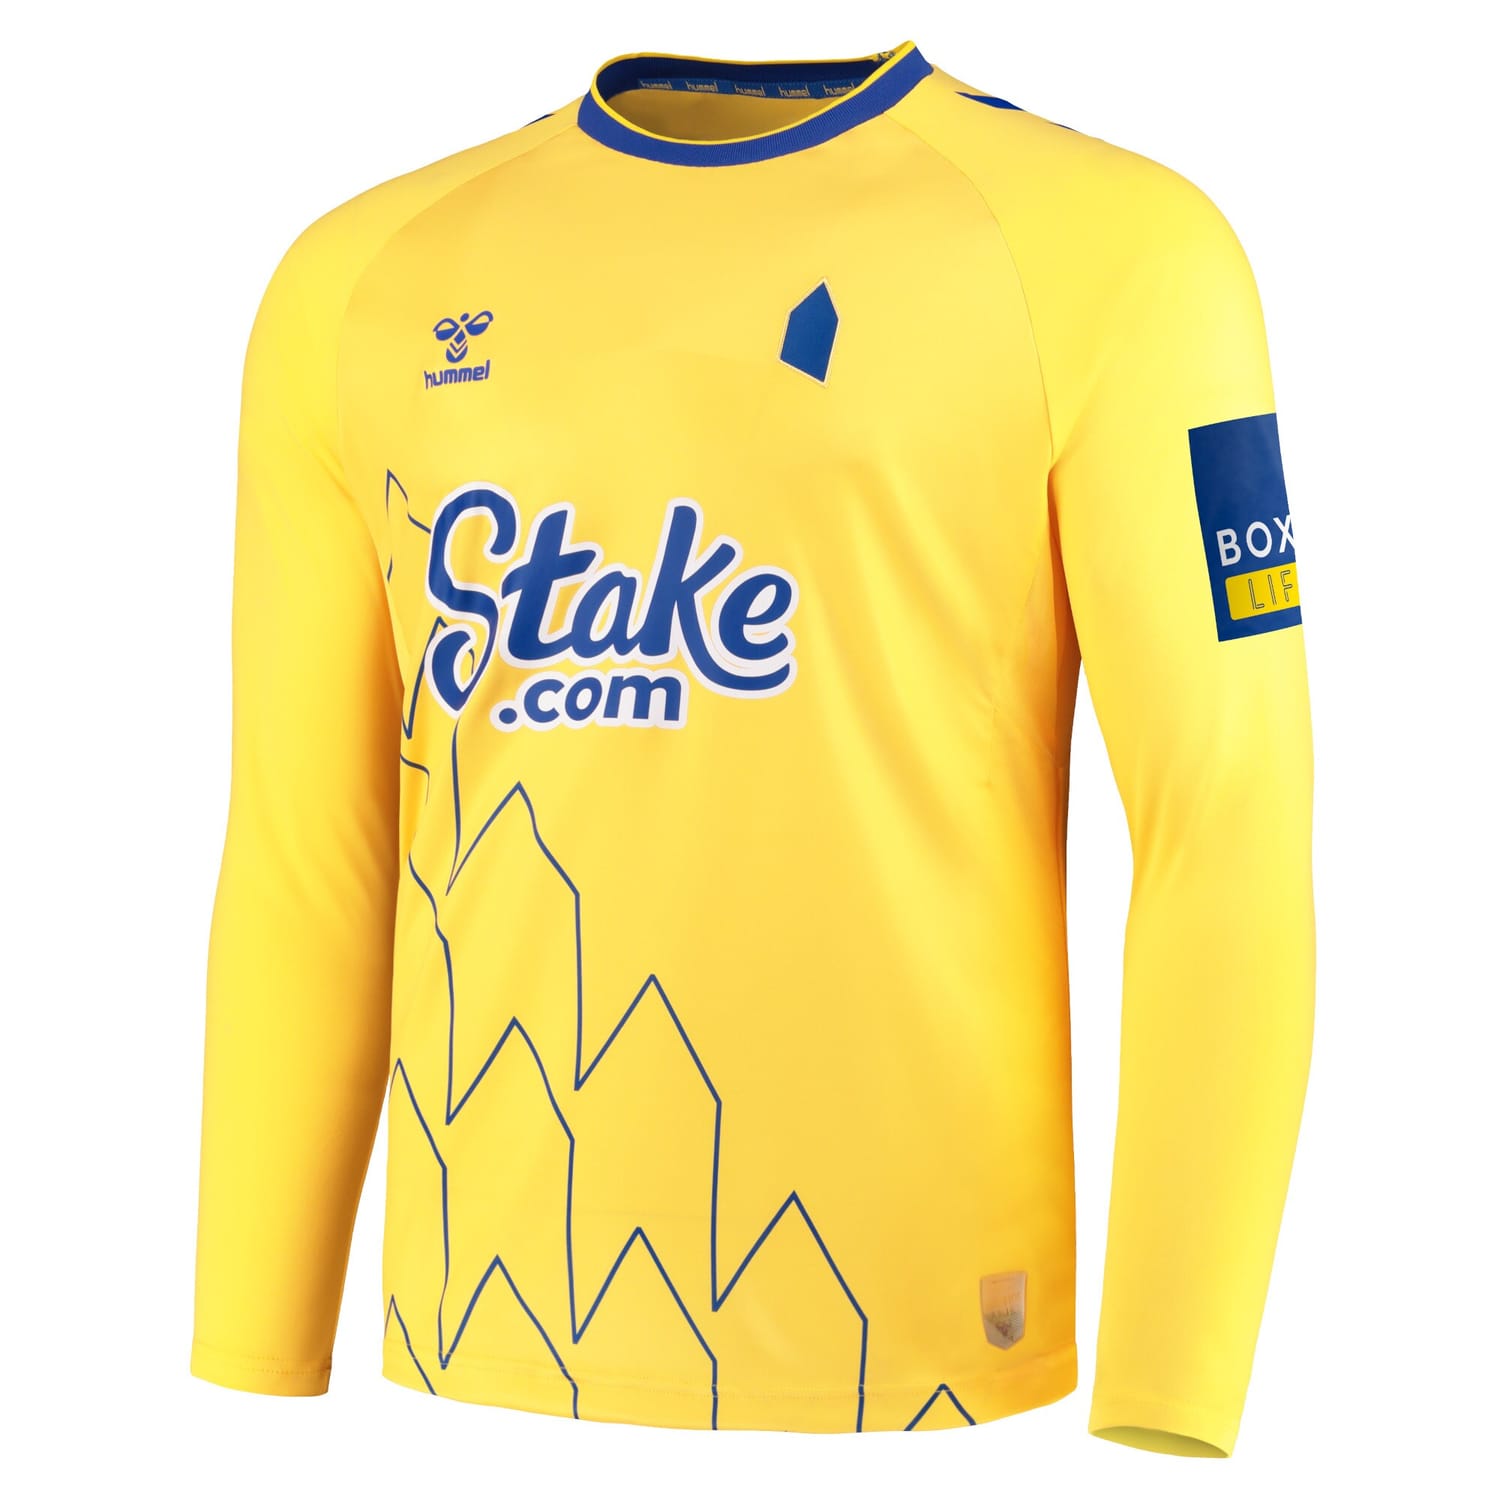 Premier League Everton Third Jersey Shirt Long Sleeve 2022-23 player Dominic Calvert-Lewin 9 printing for Men